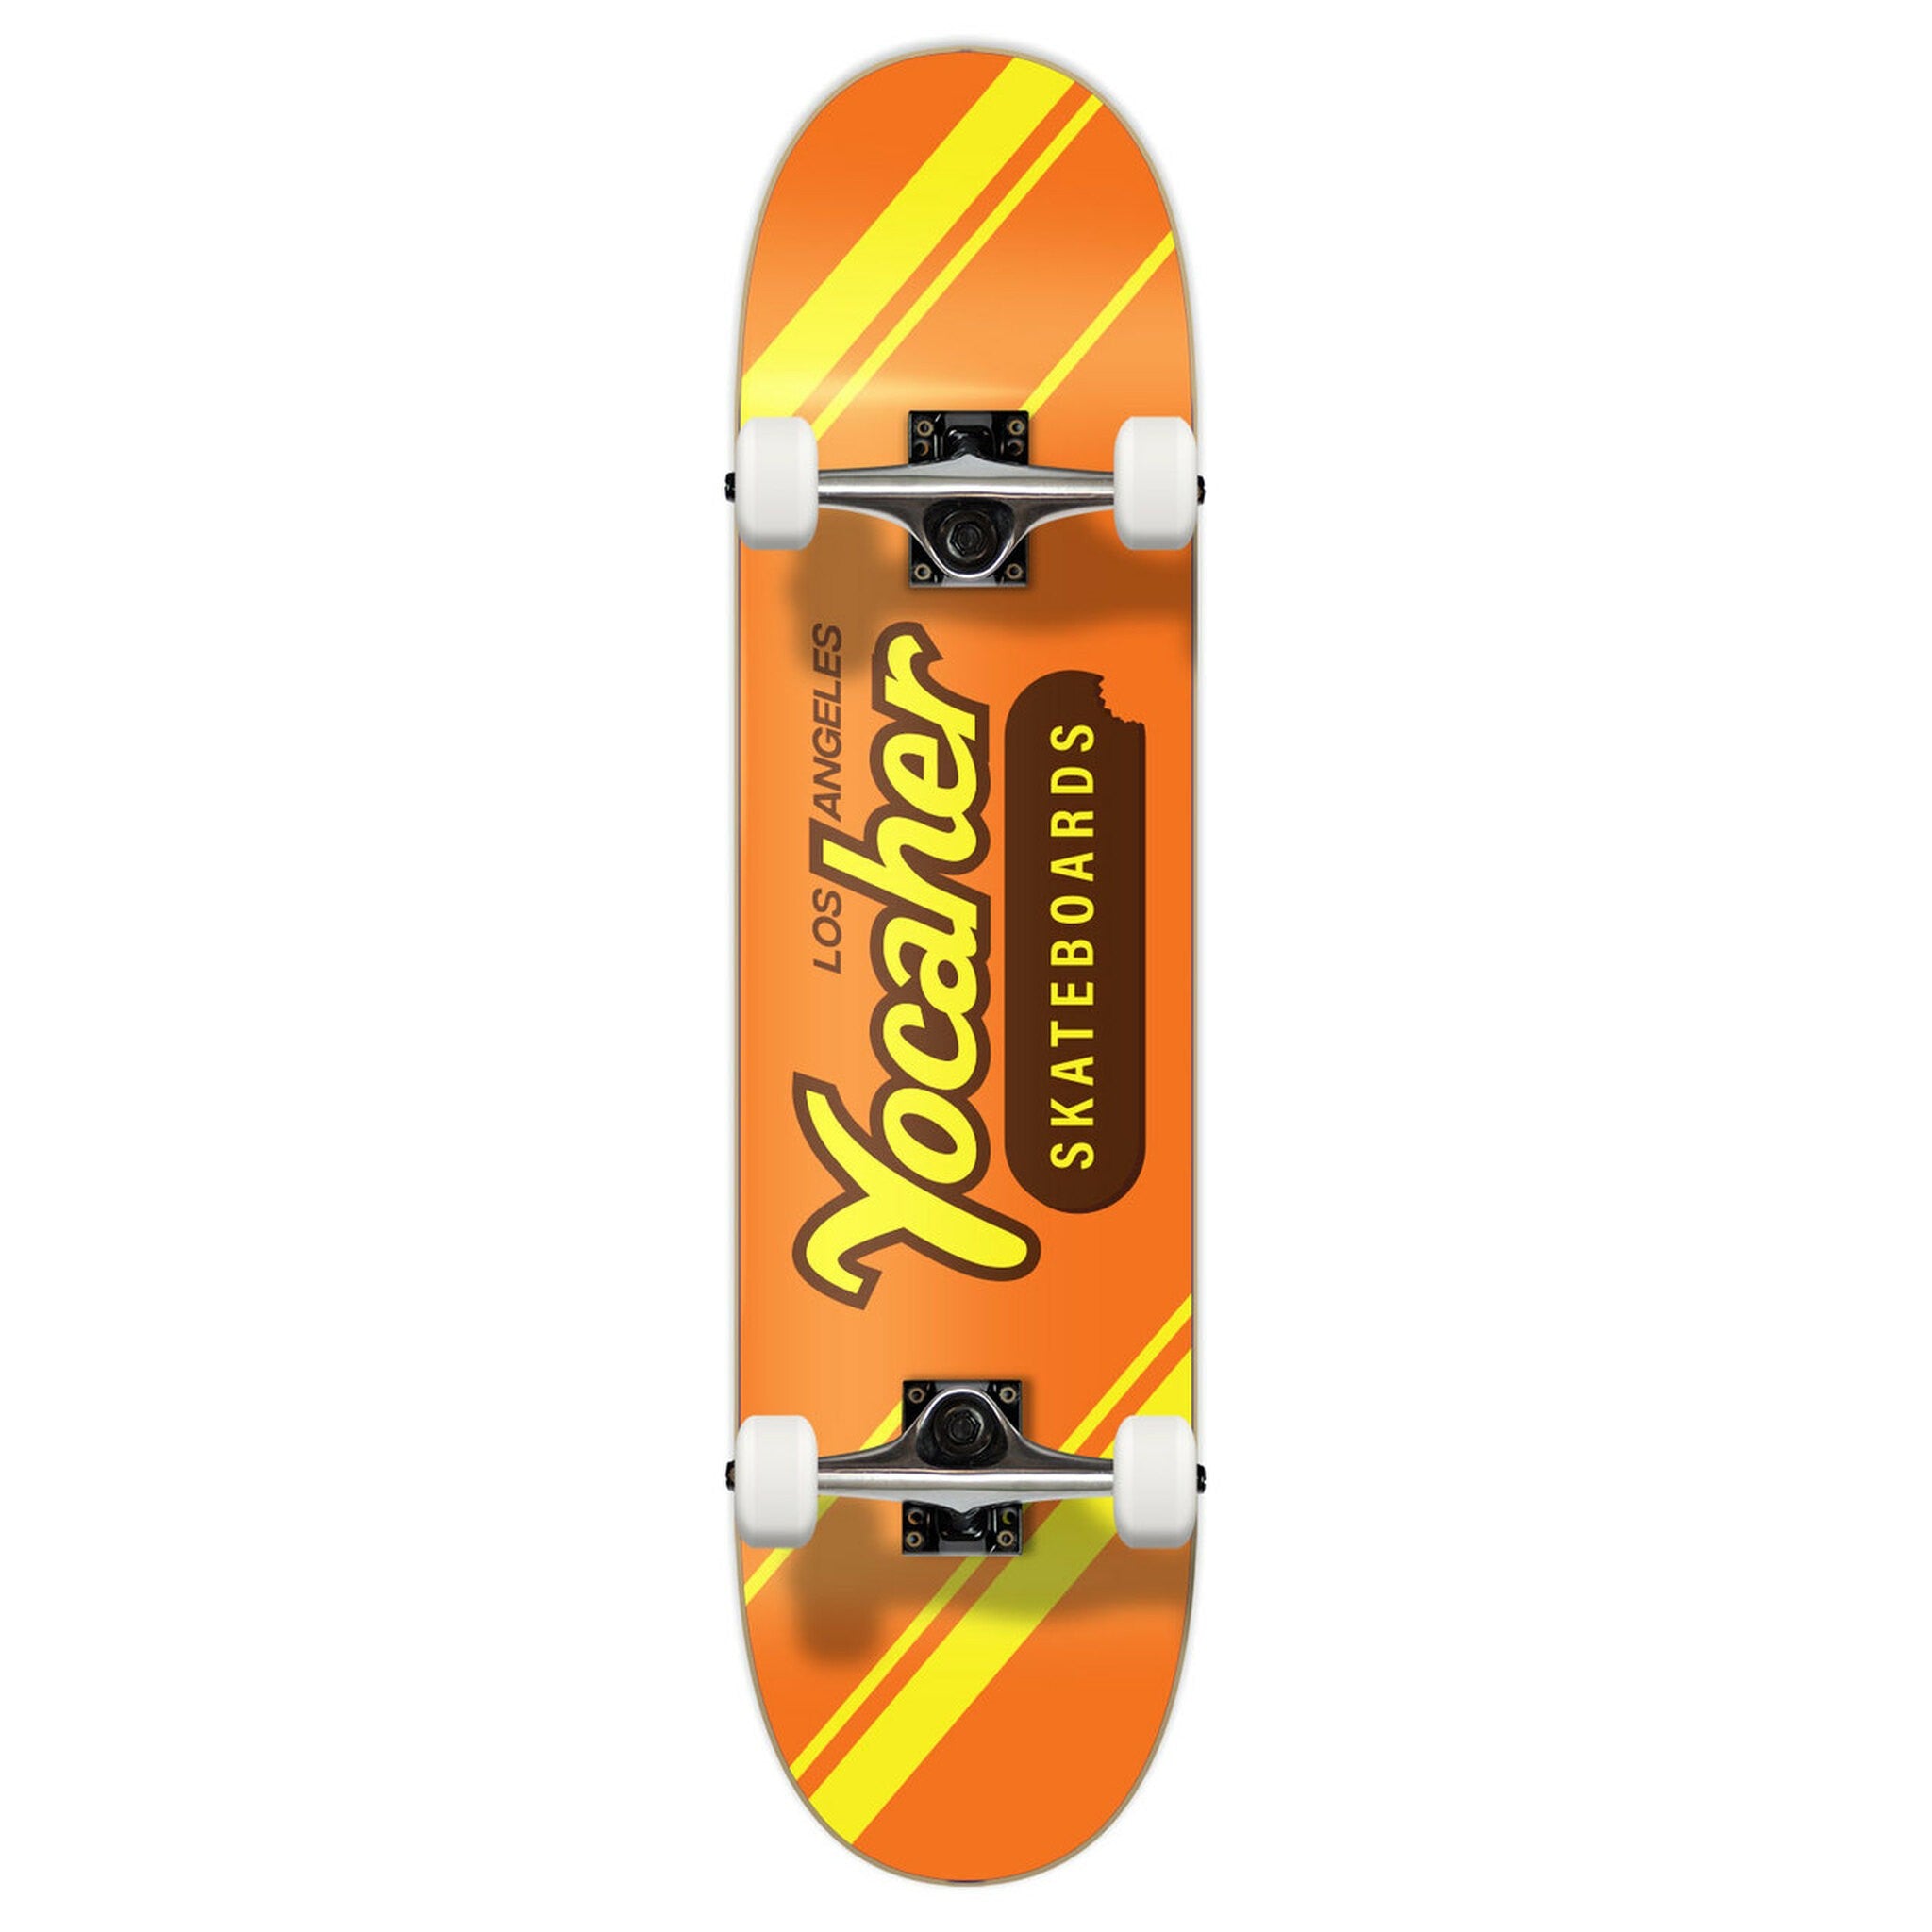 YOCAHER PB &amp; C - Street Skateboard - Complete Board